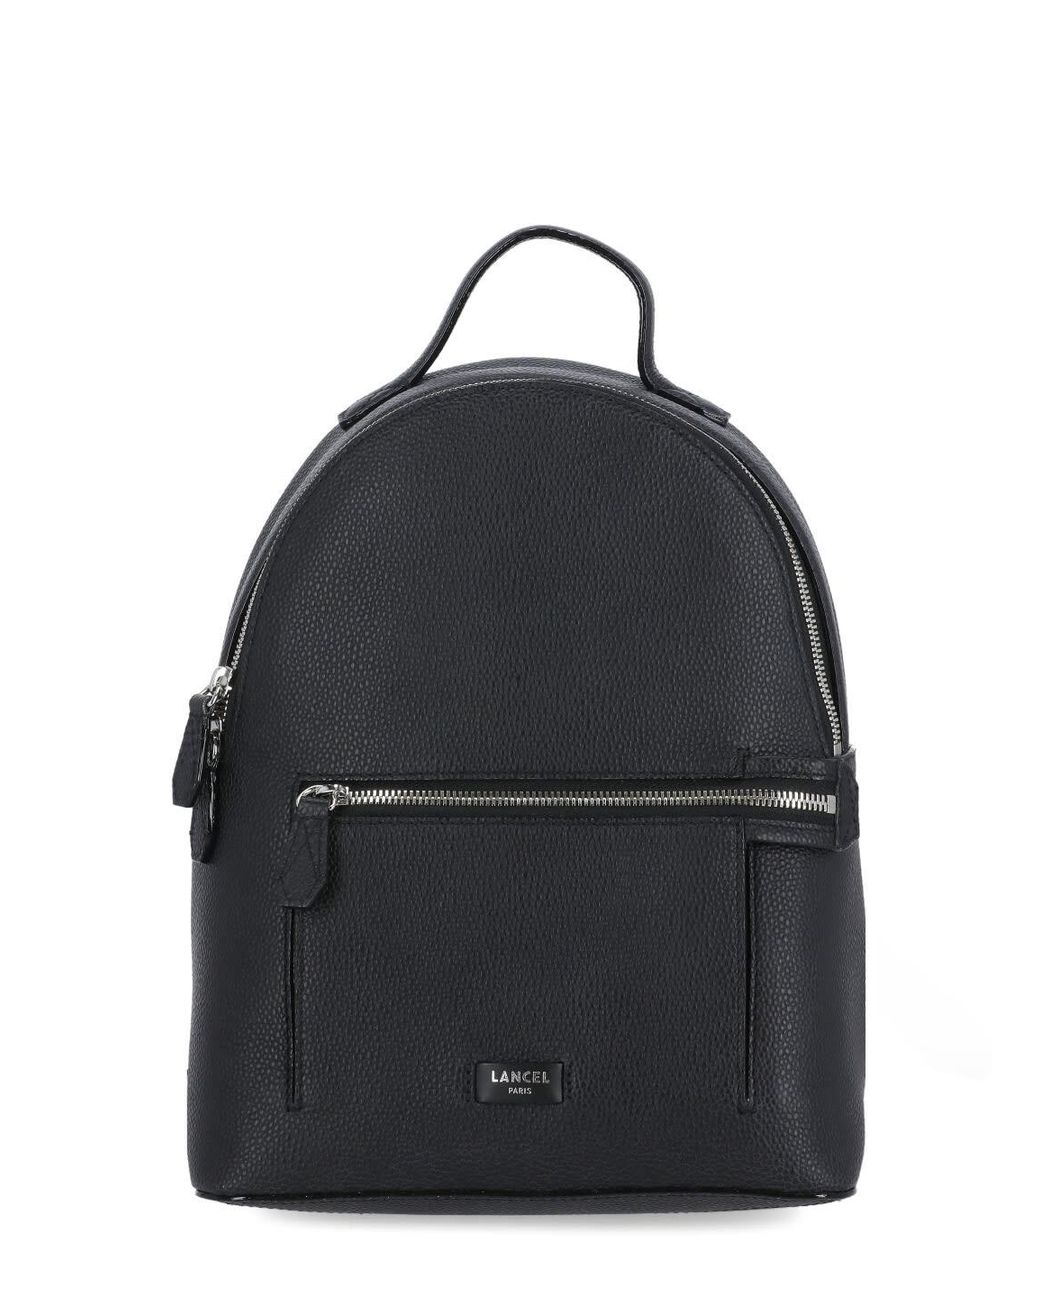 Lancel Pebbled Leather Backpack in Black | Lyst